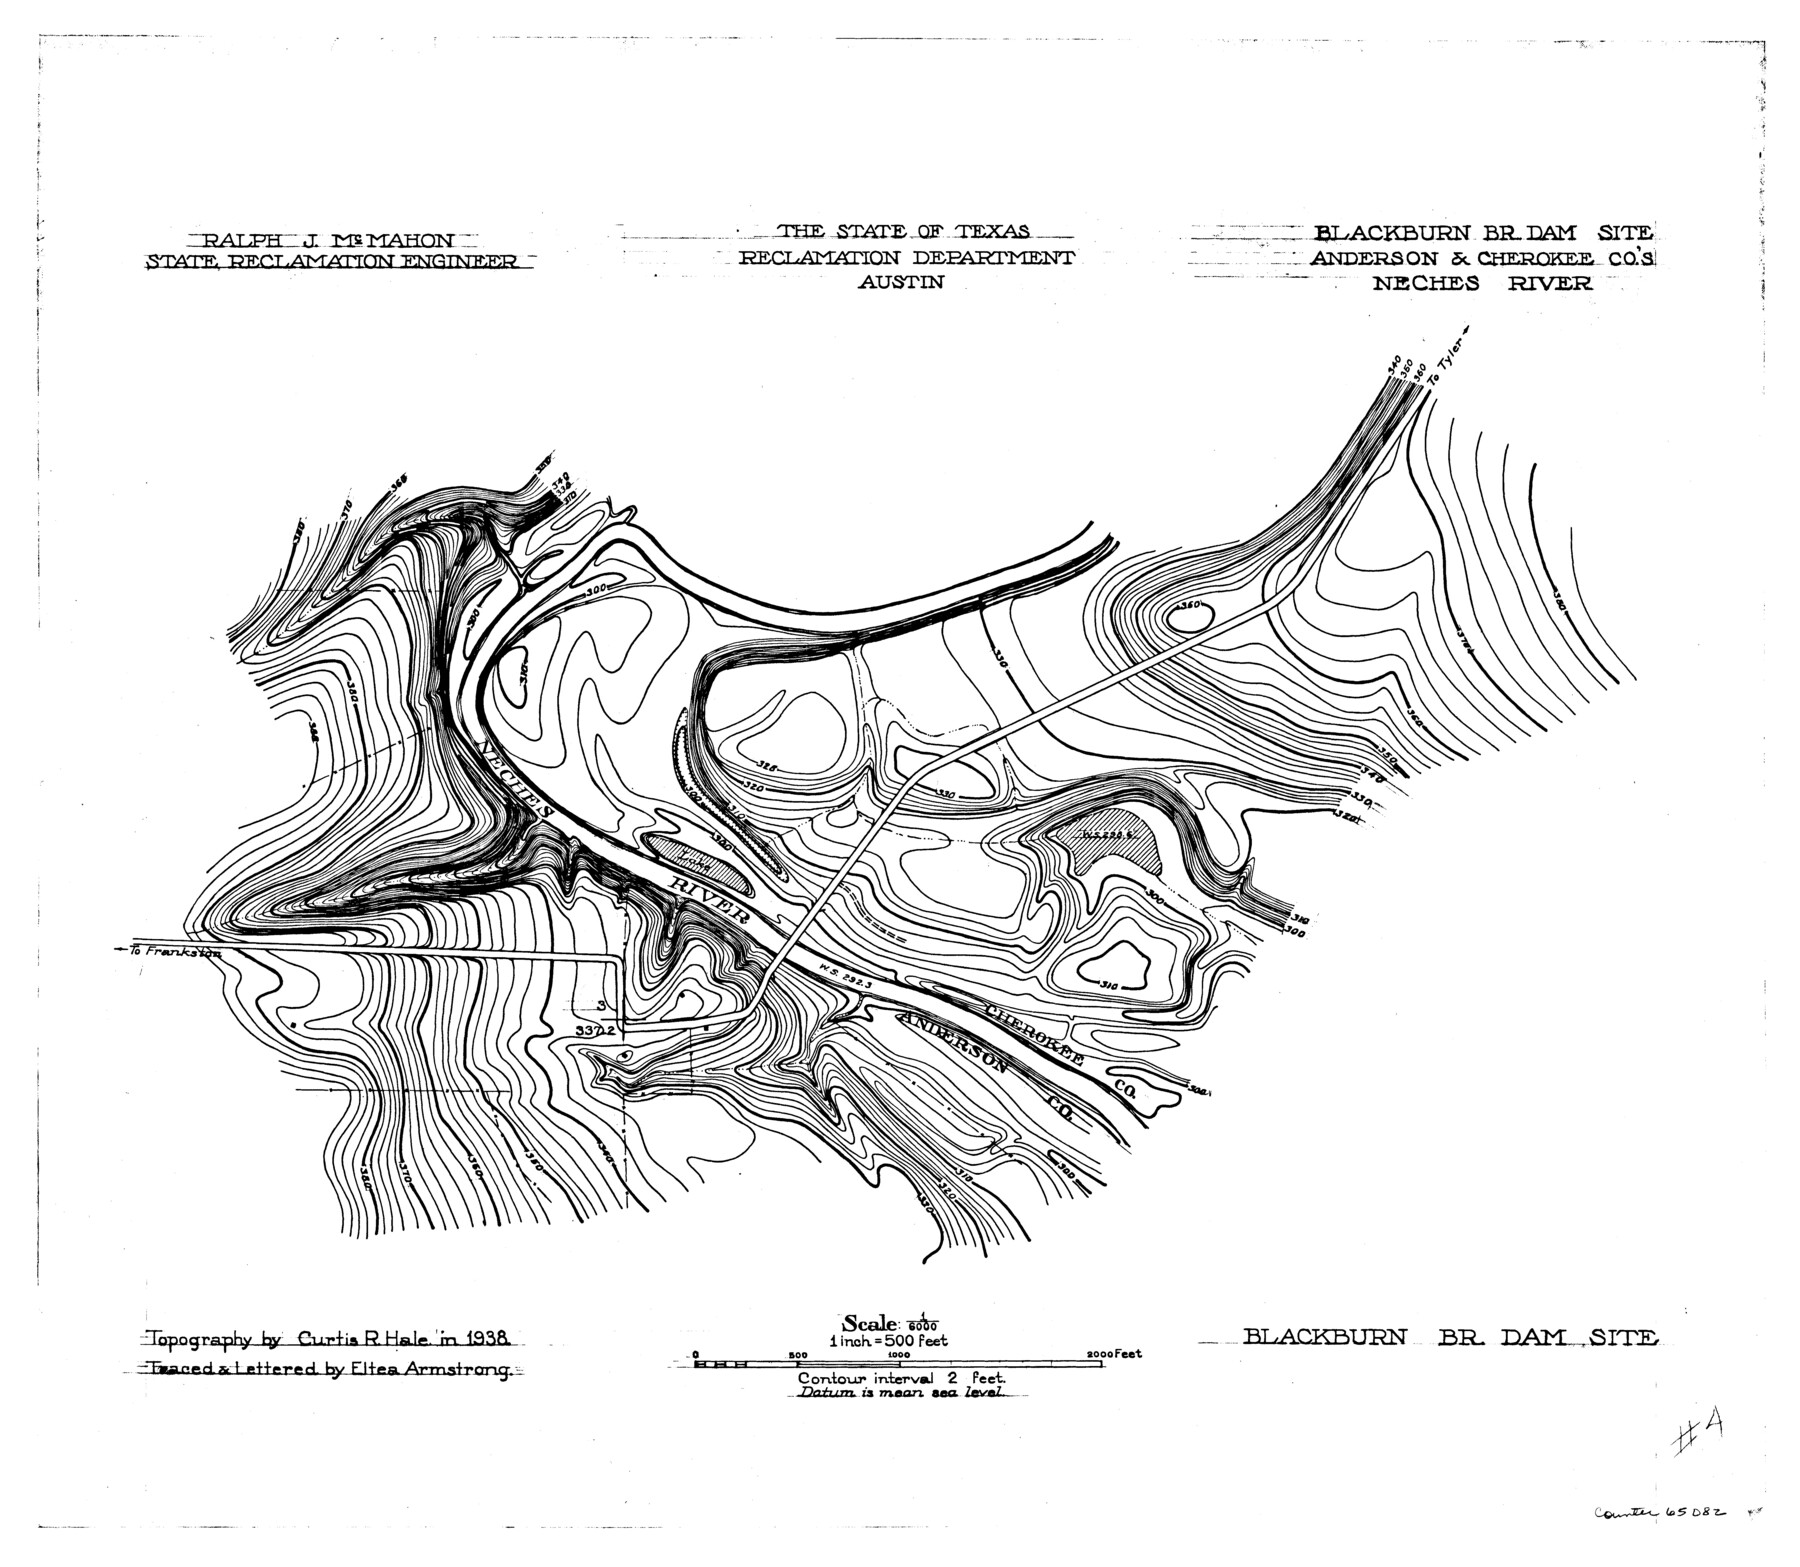 65082, Neches River, Blackburn Bridge Dam Site, General Map Collection